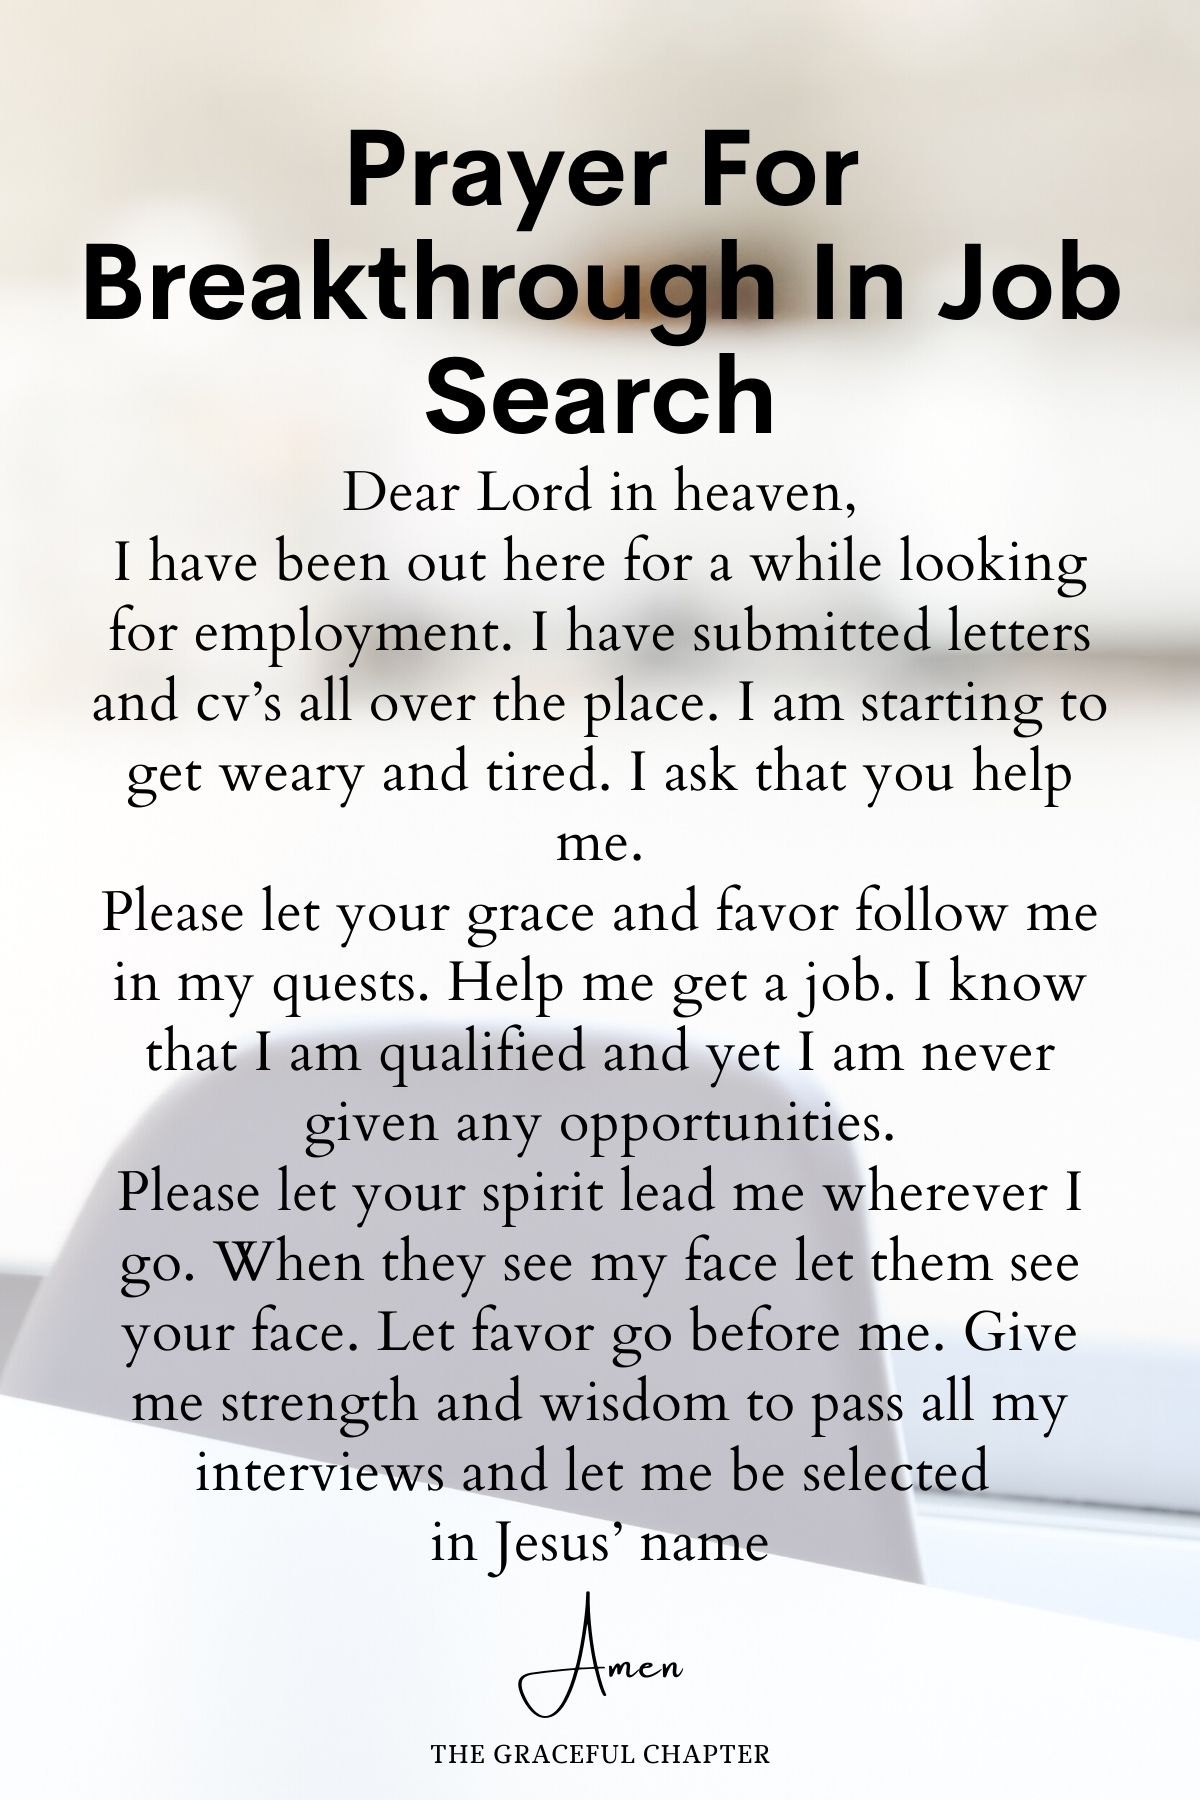 Prayer for breakthrough in job search